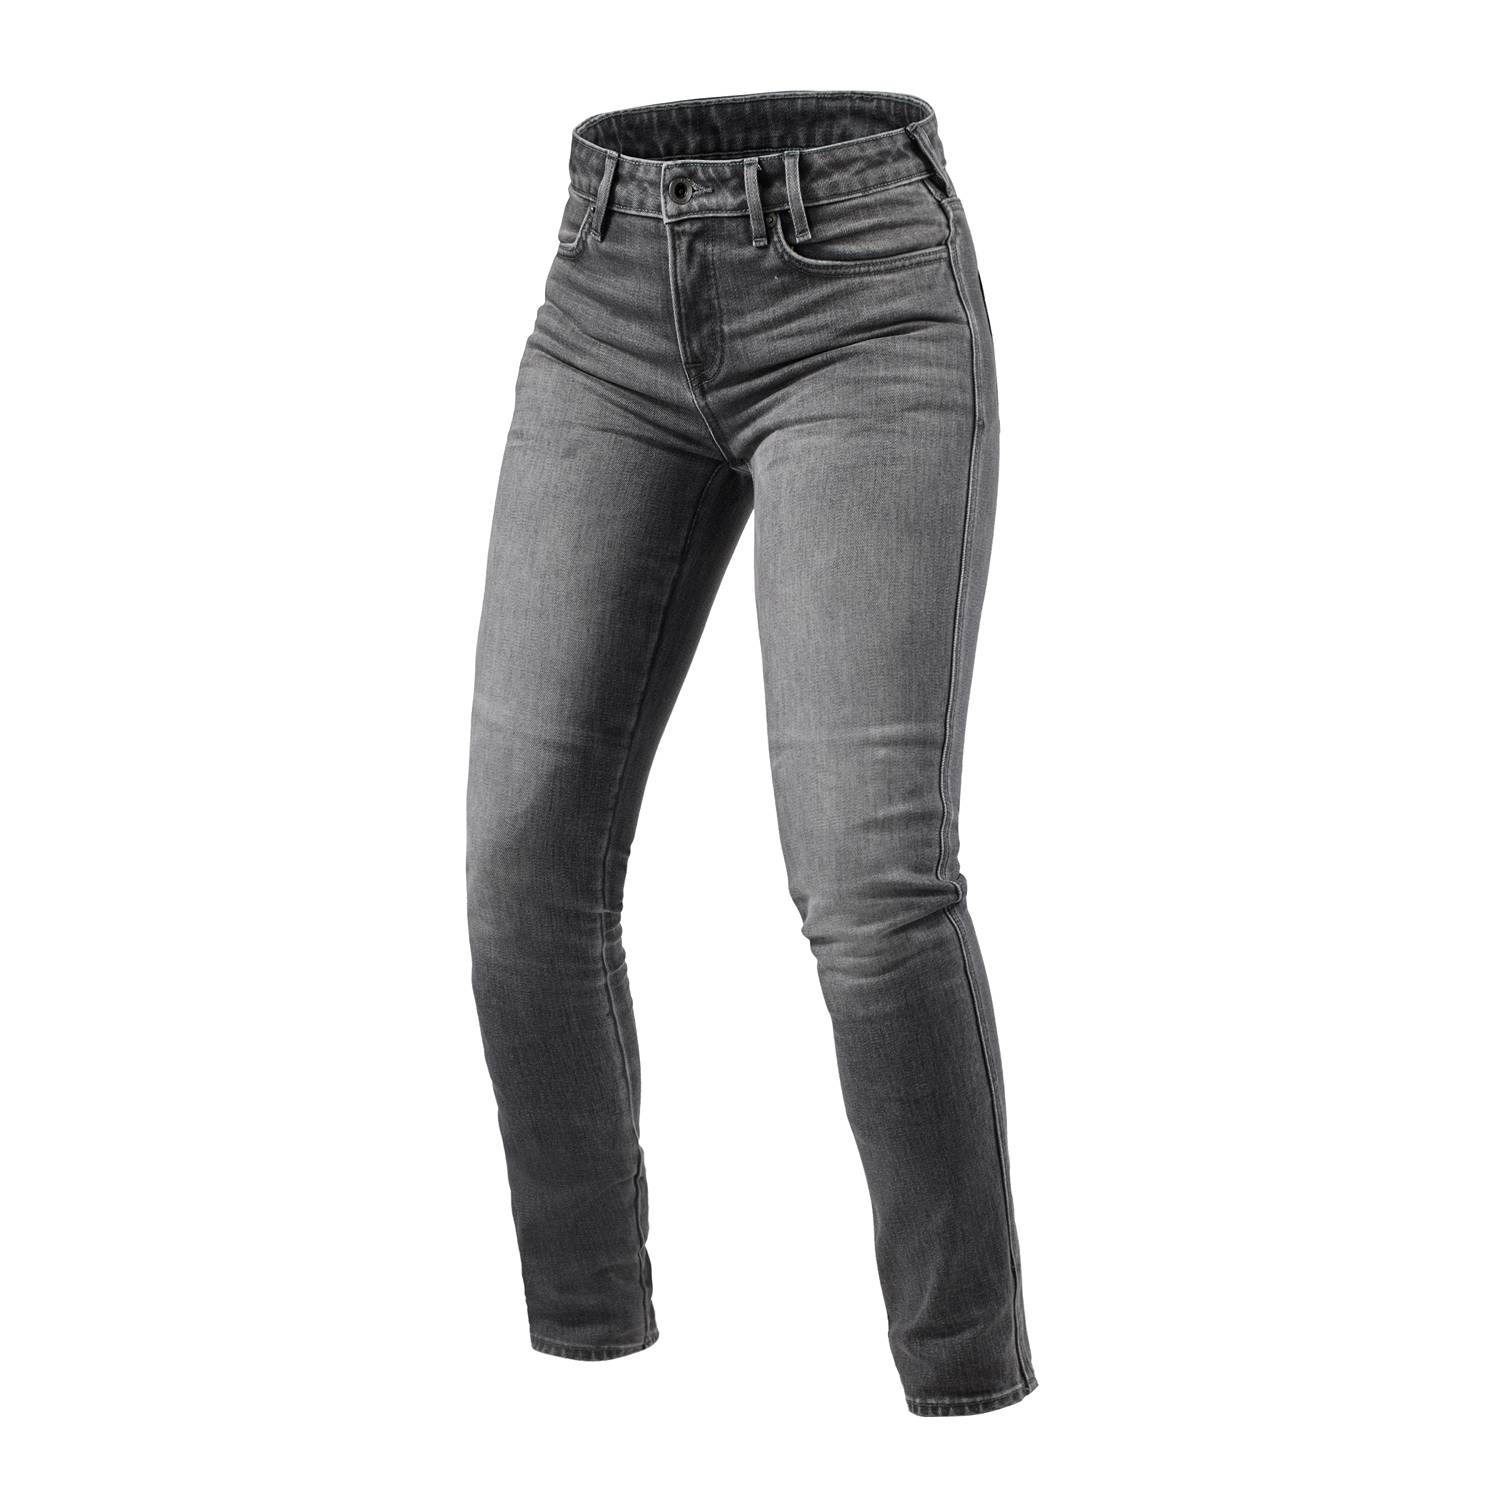 Image of REV'IT! Jeans Shelby 2 Ladies SK Medium Grey Stone L30 Size L30/W29 ID 8700001376723